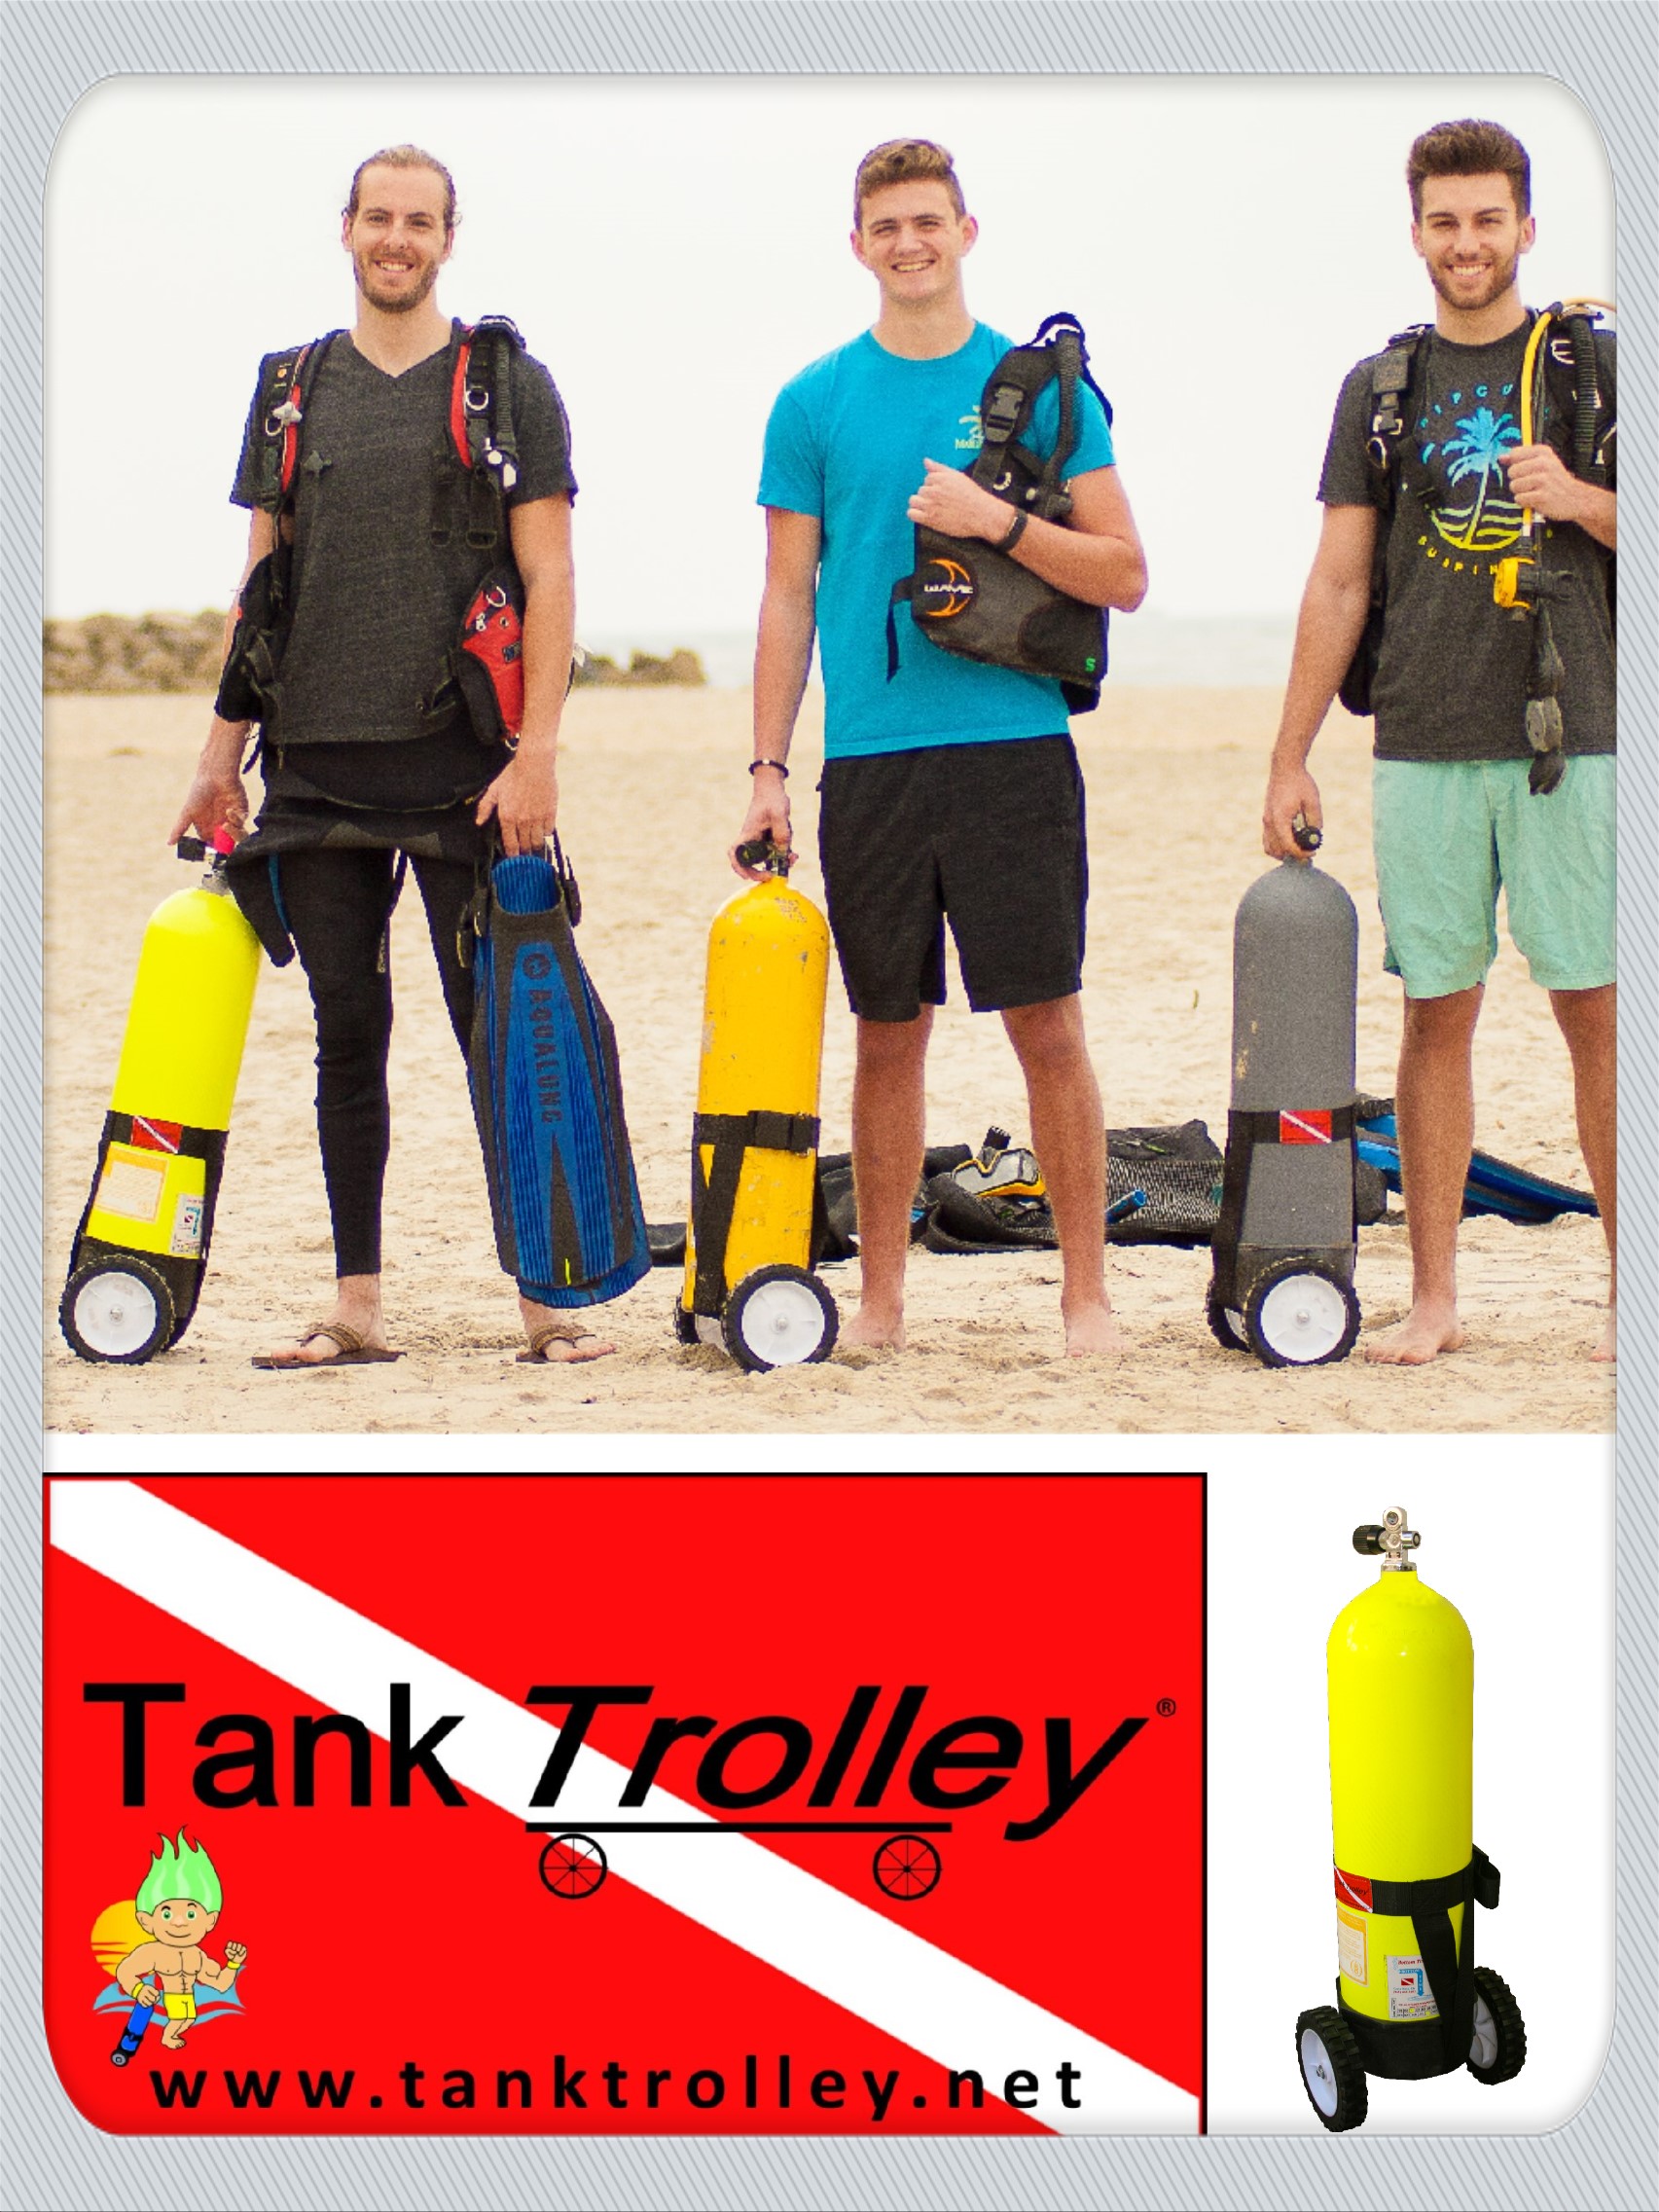 visit www.tanktrolley.net for more info